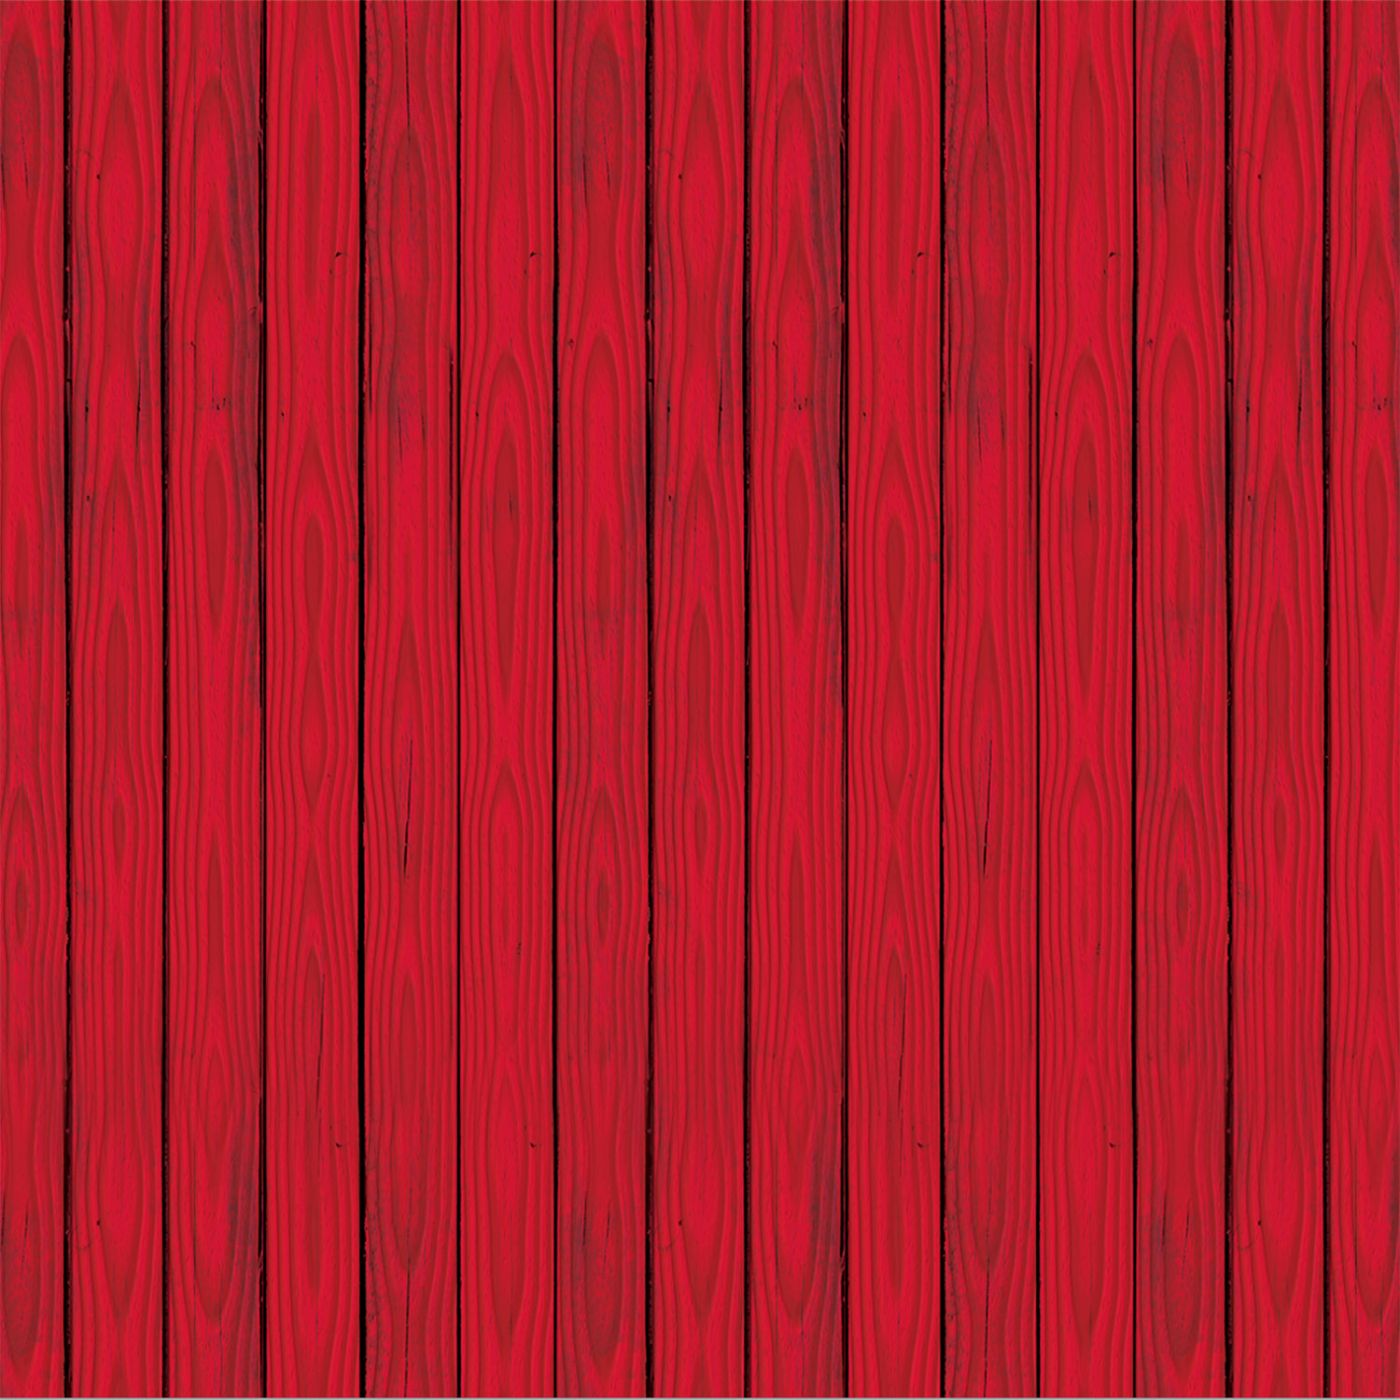 Red Barn Siding Backdrop (6) image